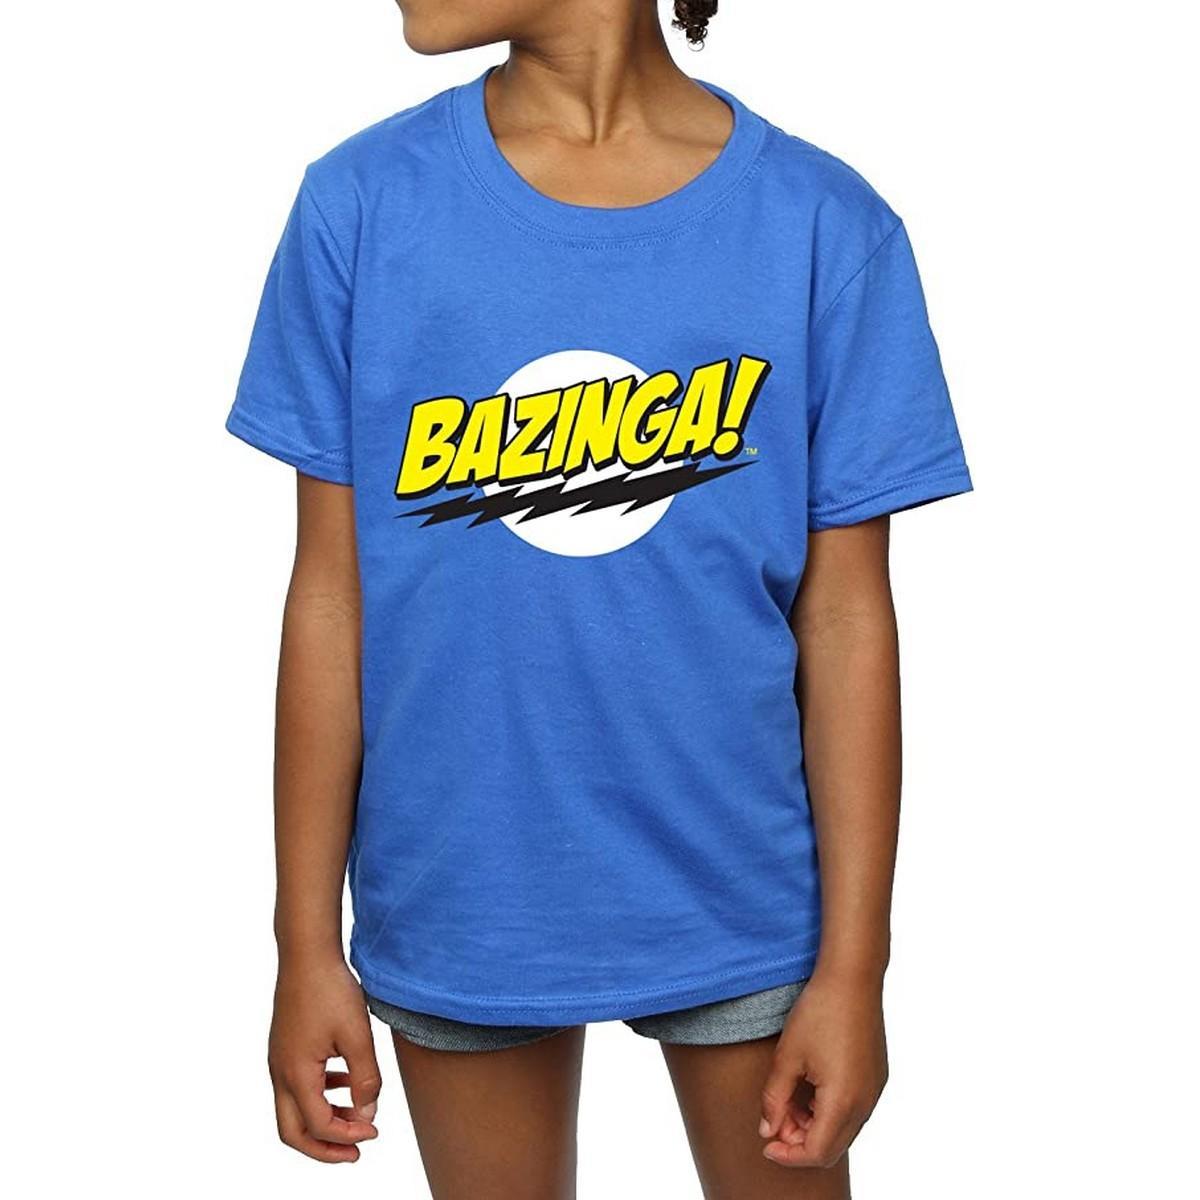 The Big Bang Theory Girls Bazinga Cotton T-Shirt (Royal Blue) (9-11 Years)